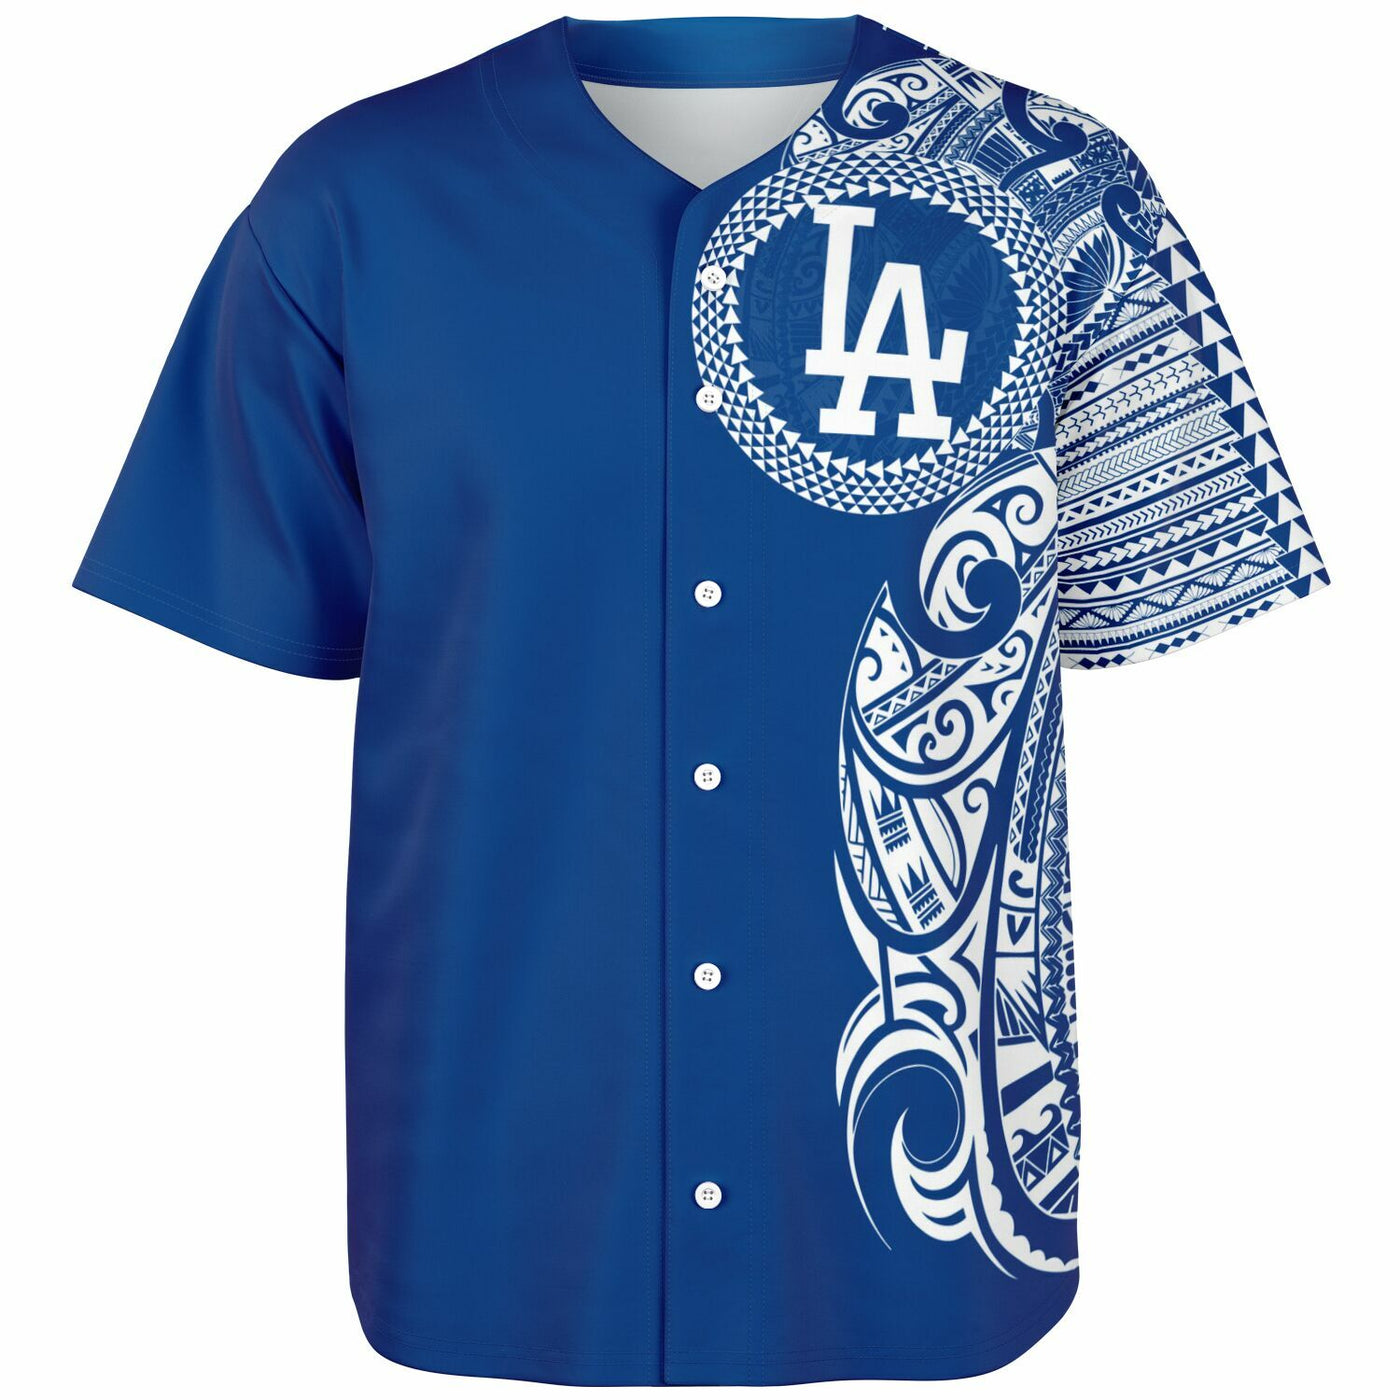 Los Angeles Dodgers Dog Jersey - Large